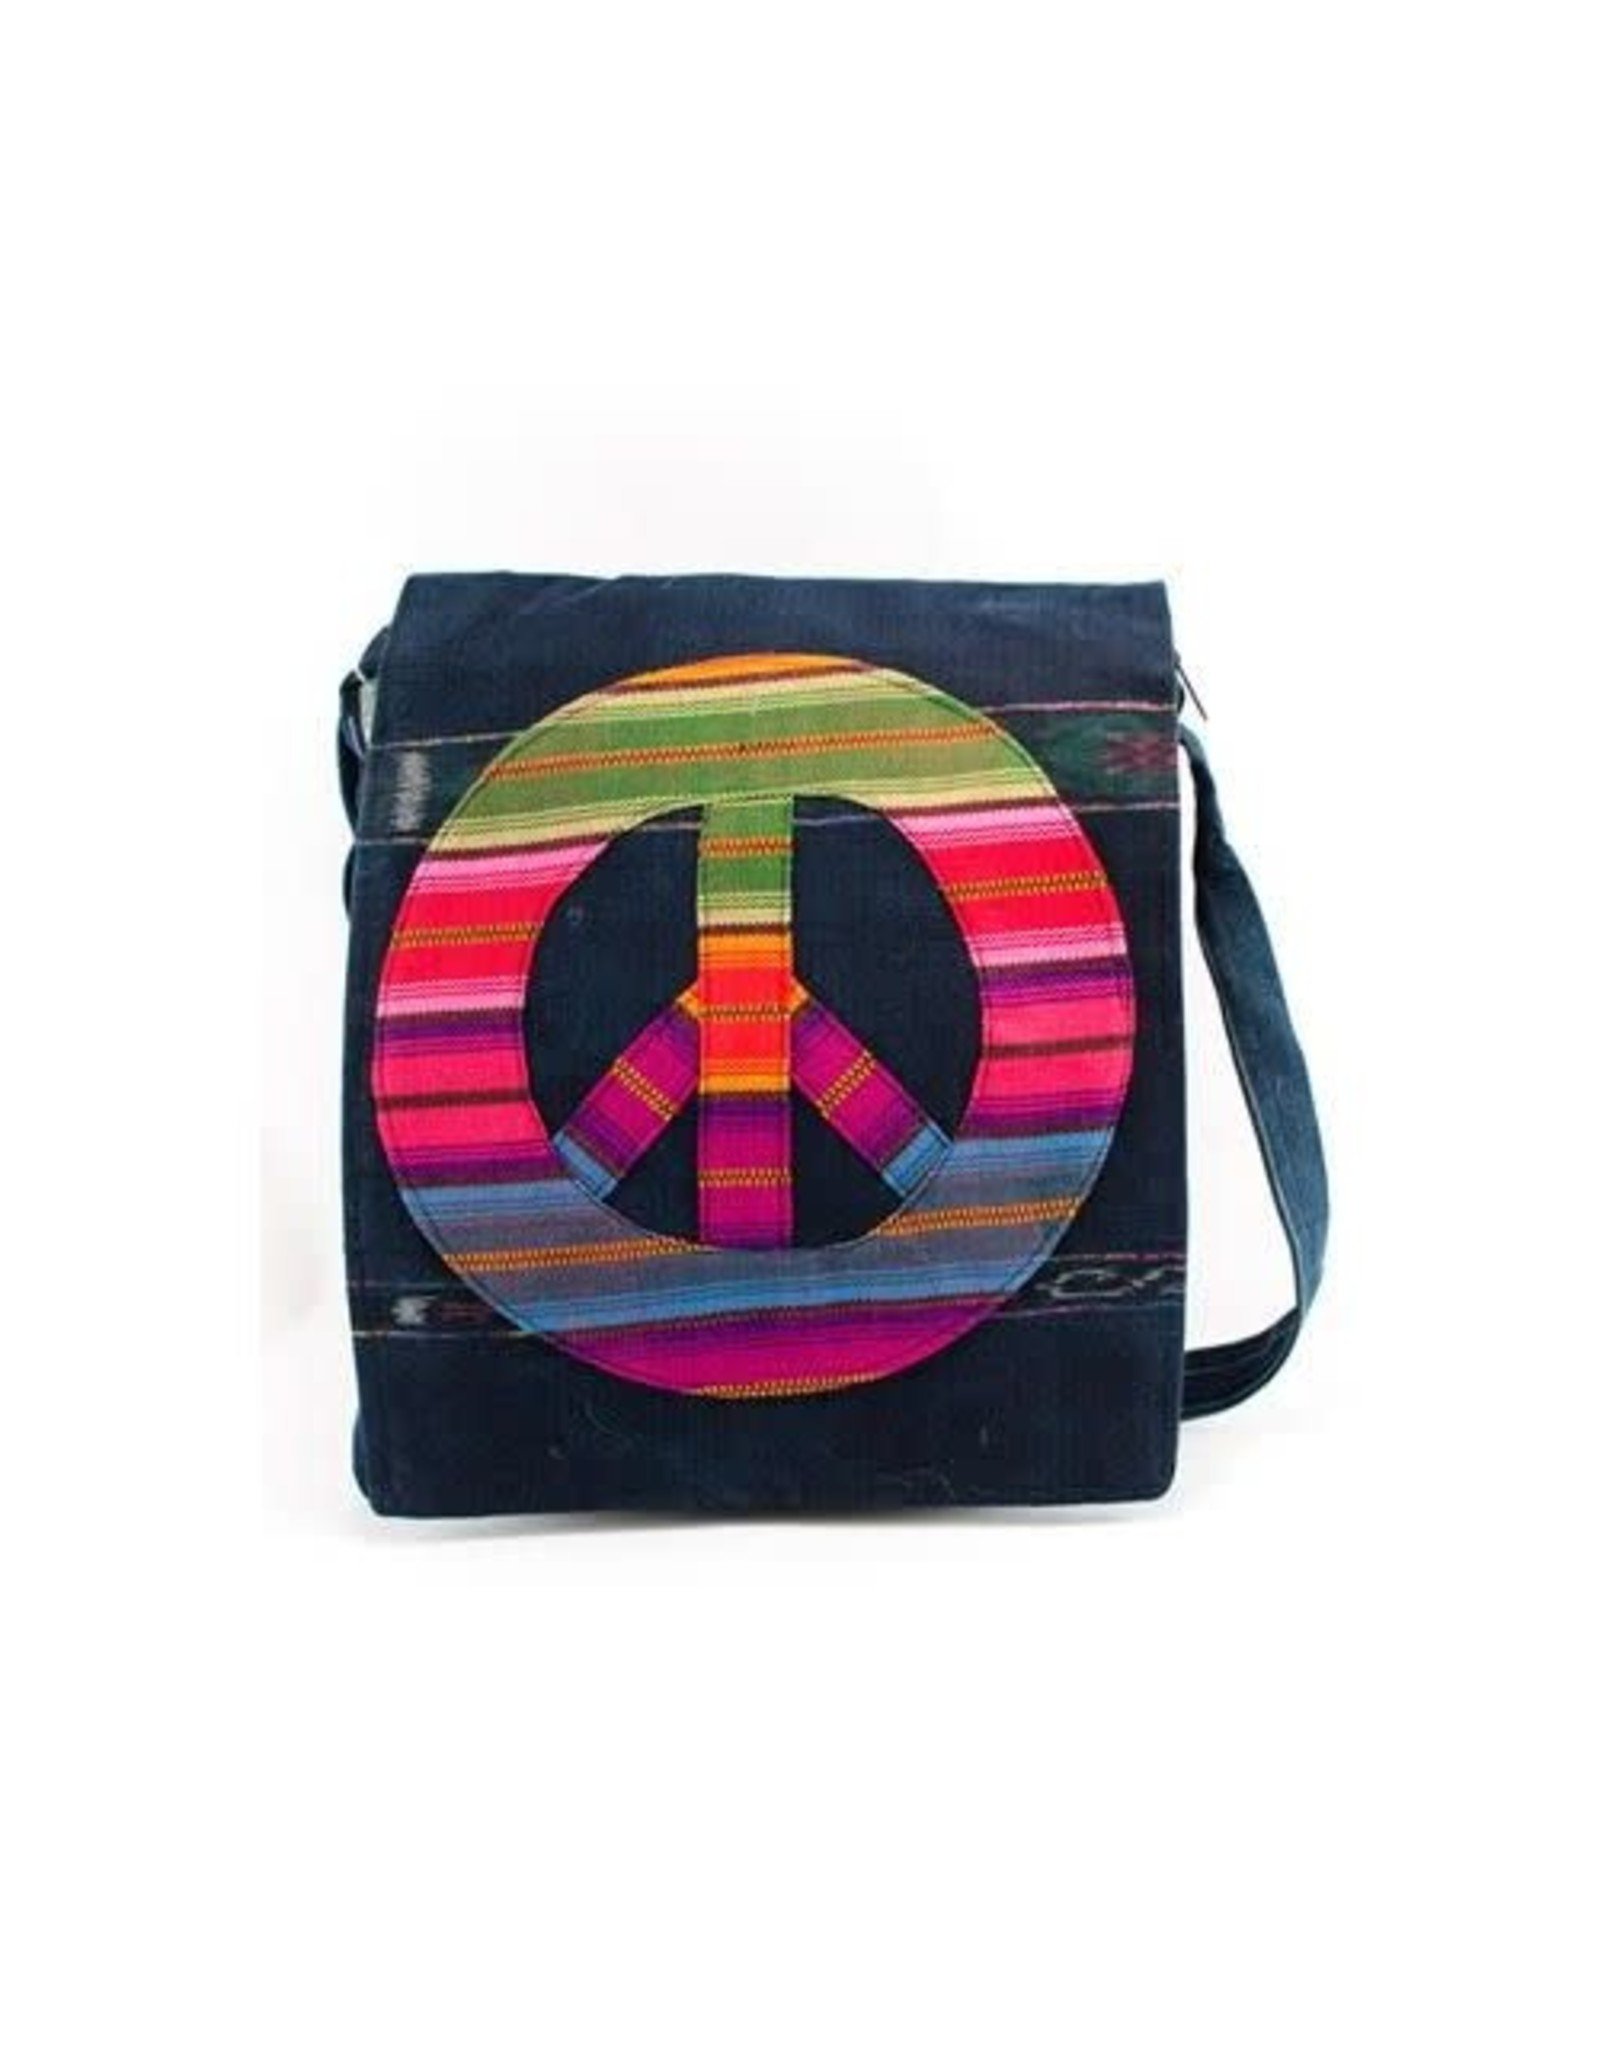 Lucia's Imports Peace Messenger Bag